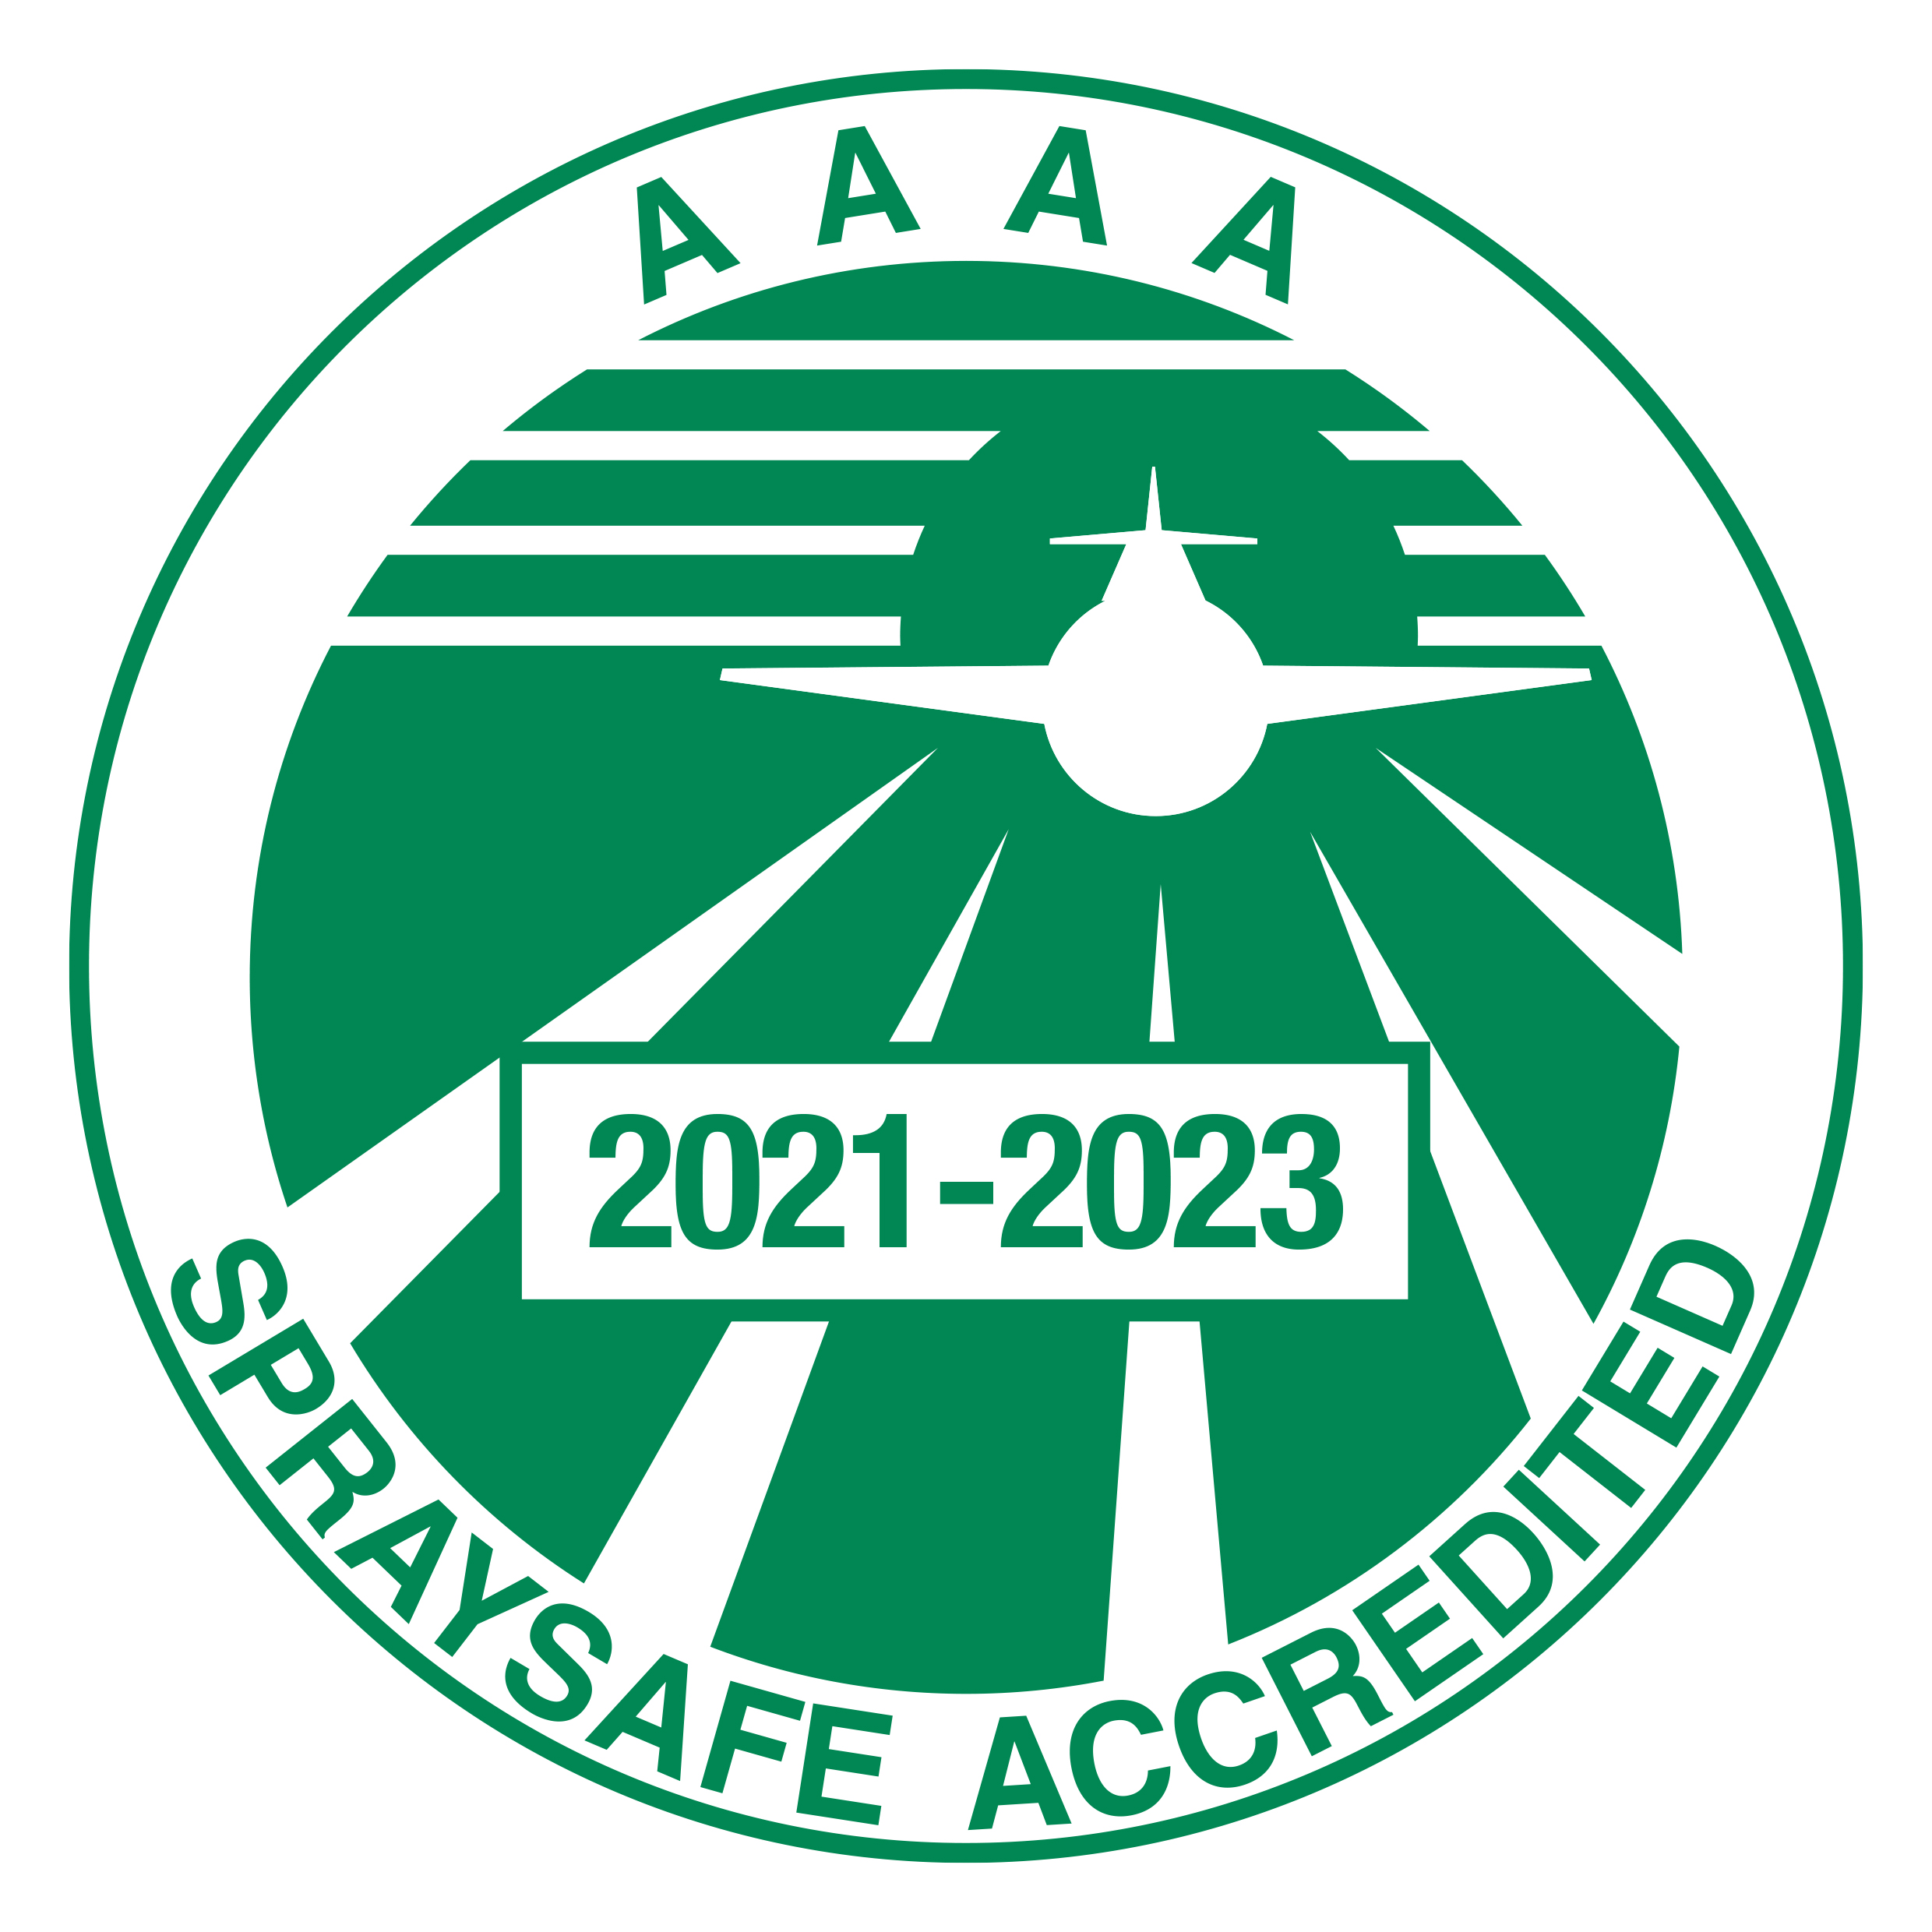 spraysafe accredited logo